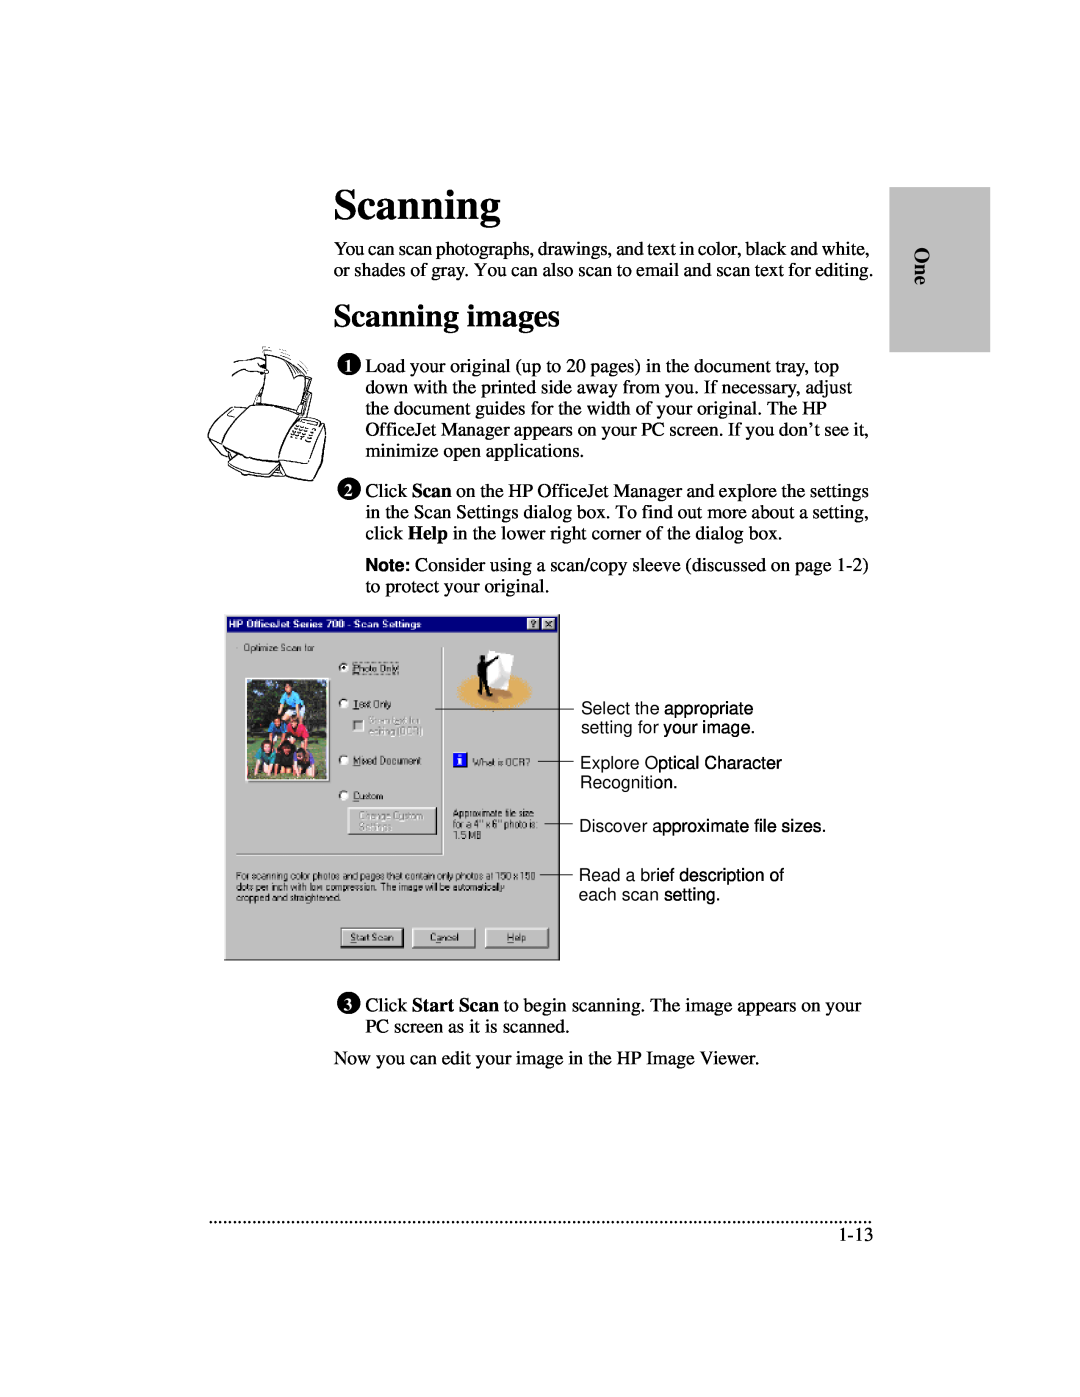 HP 700 manual Scanning images 